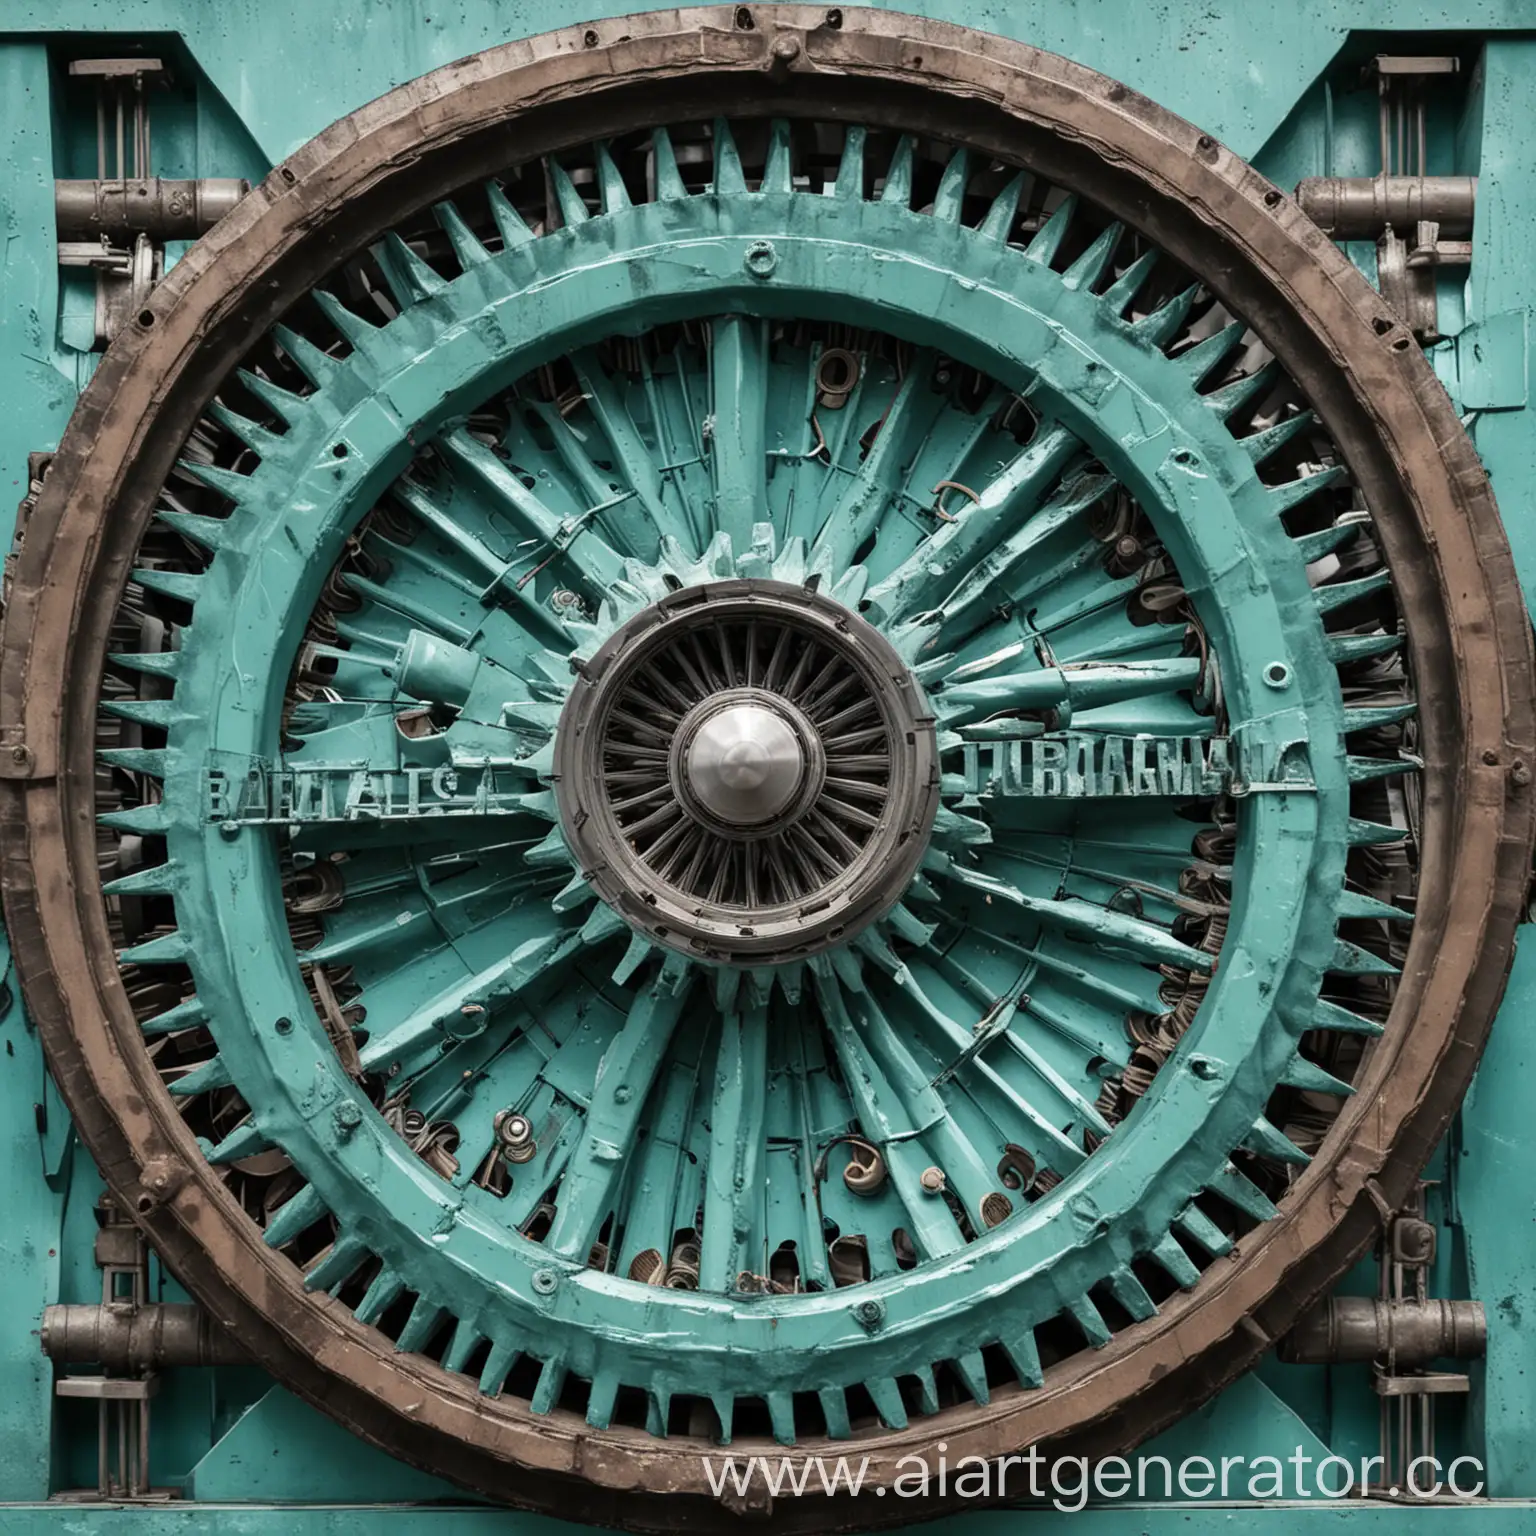 Baltic-Turbine-Mechanical-Plant-Logo-Steam-Turbine-Repair-with-Turquoise-Gears